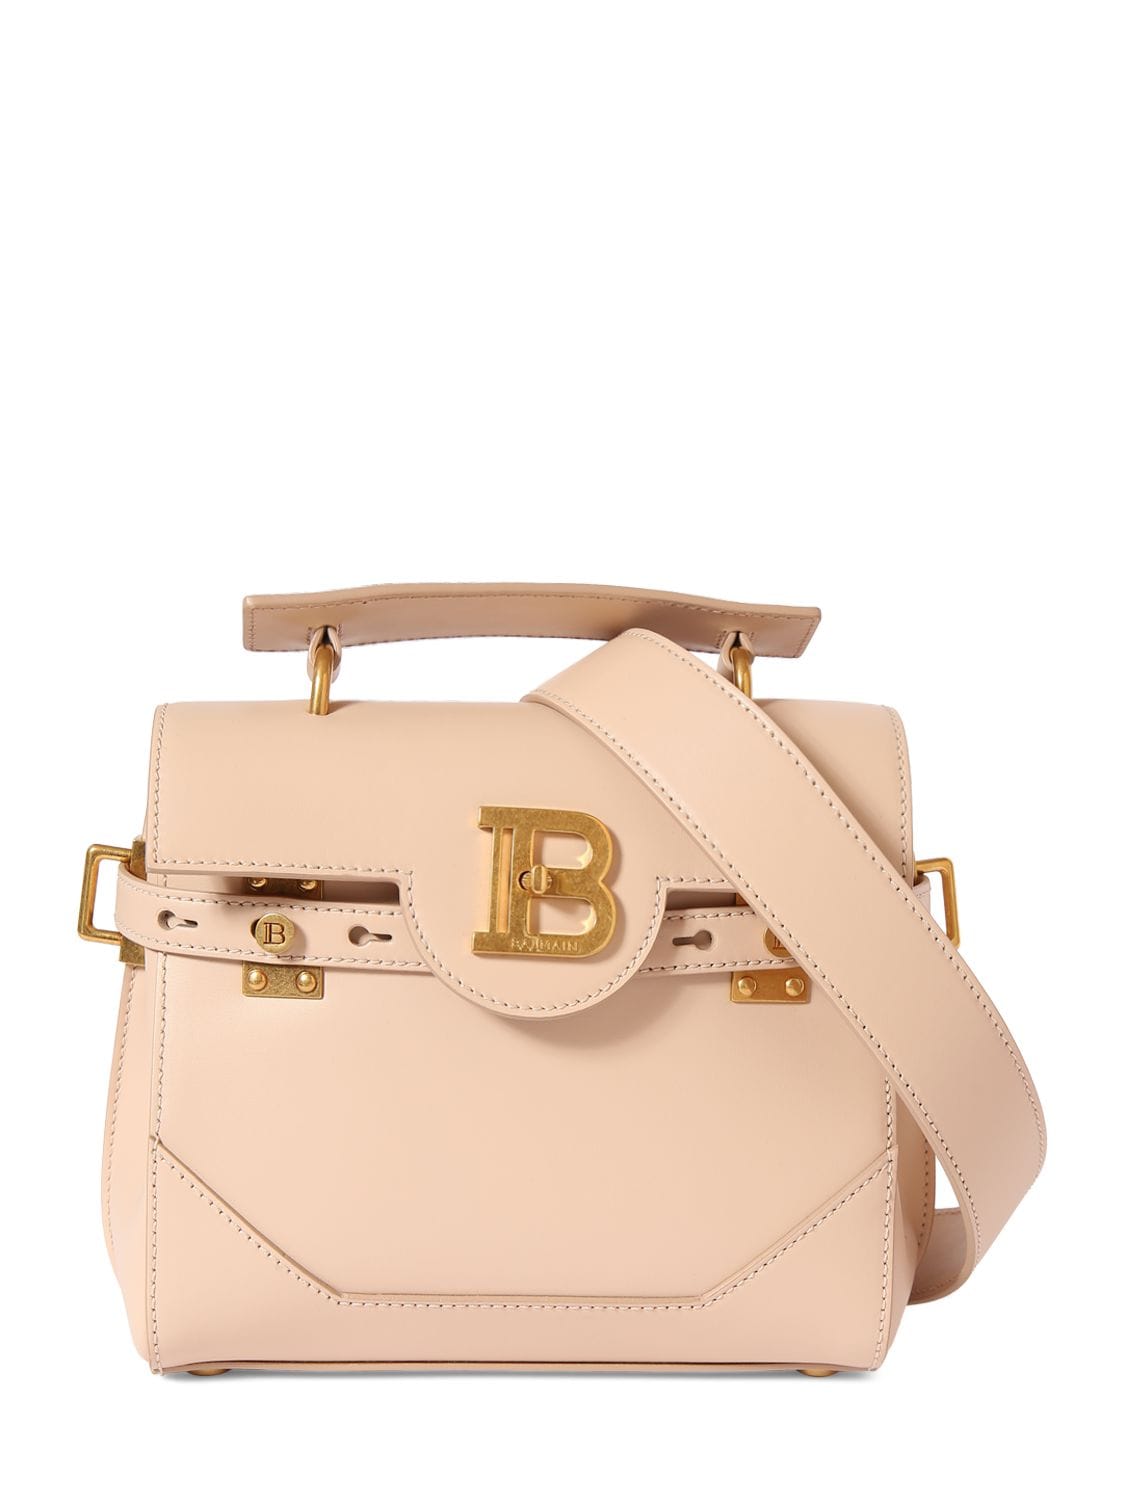 Image of Bbuzz 23 Leather Top Handle Bag